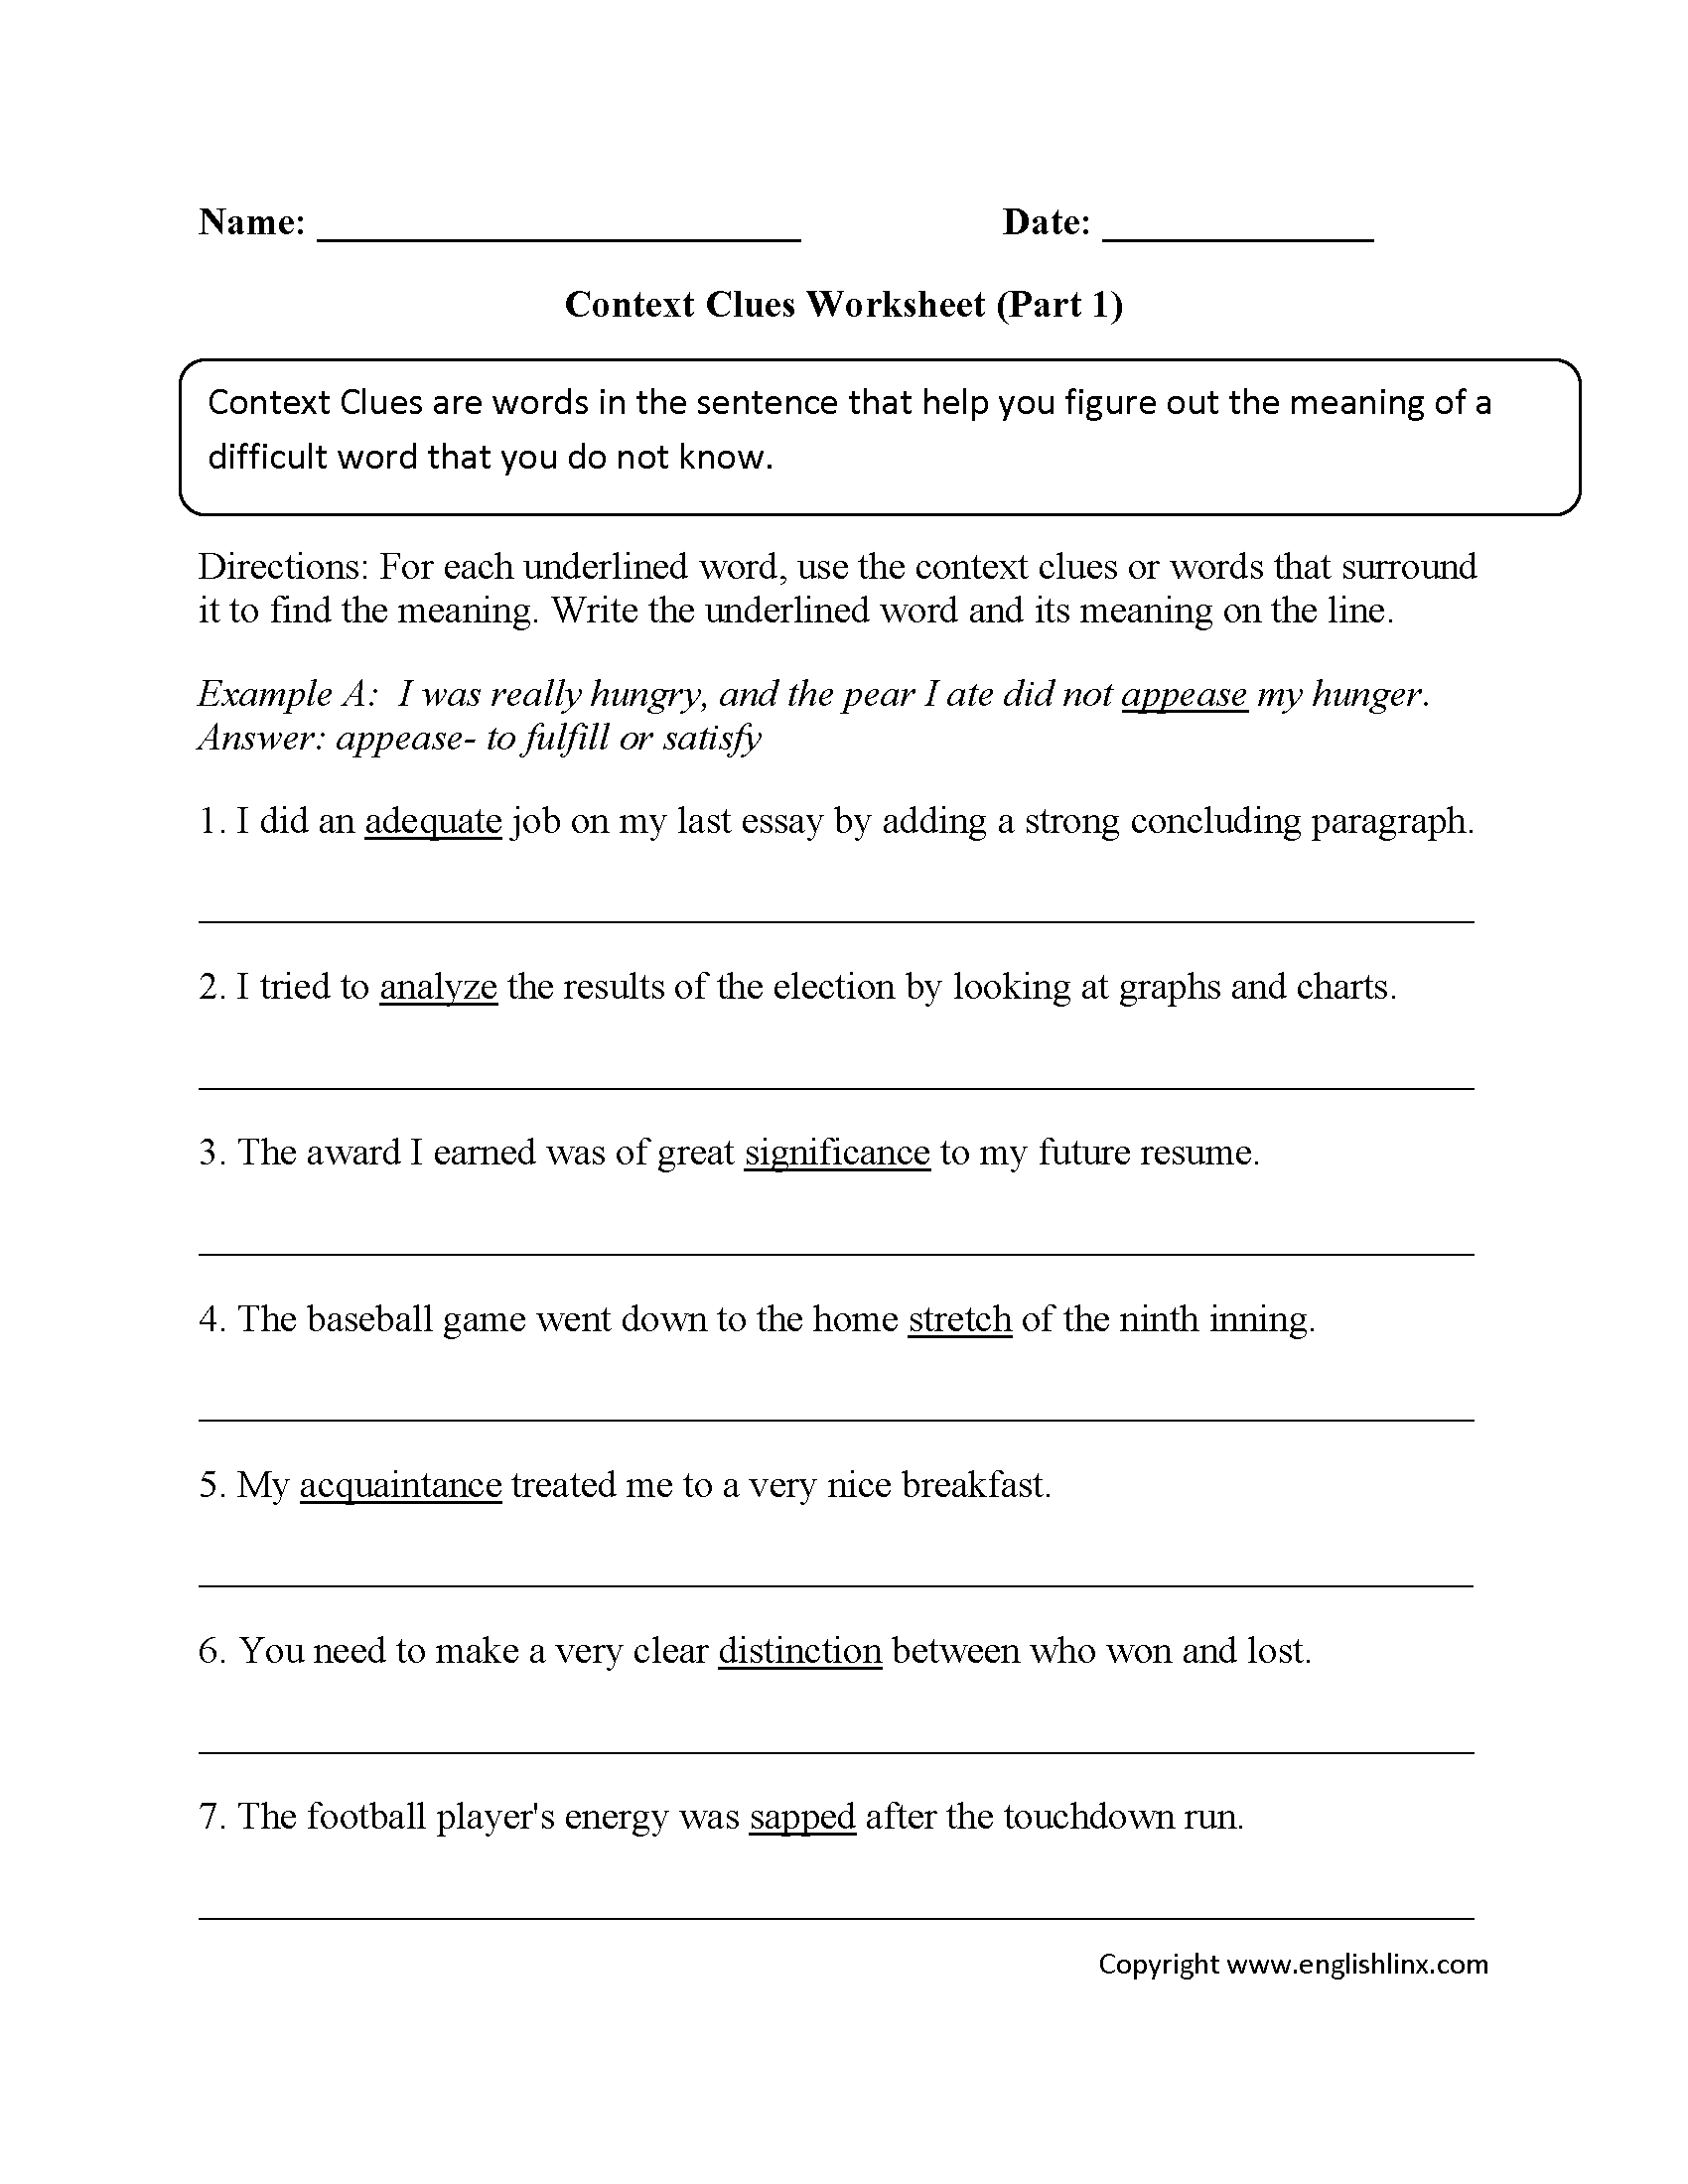 prepositional-phrases-worksheets-7th-grade-grammar-exercise-workbook